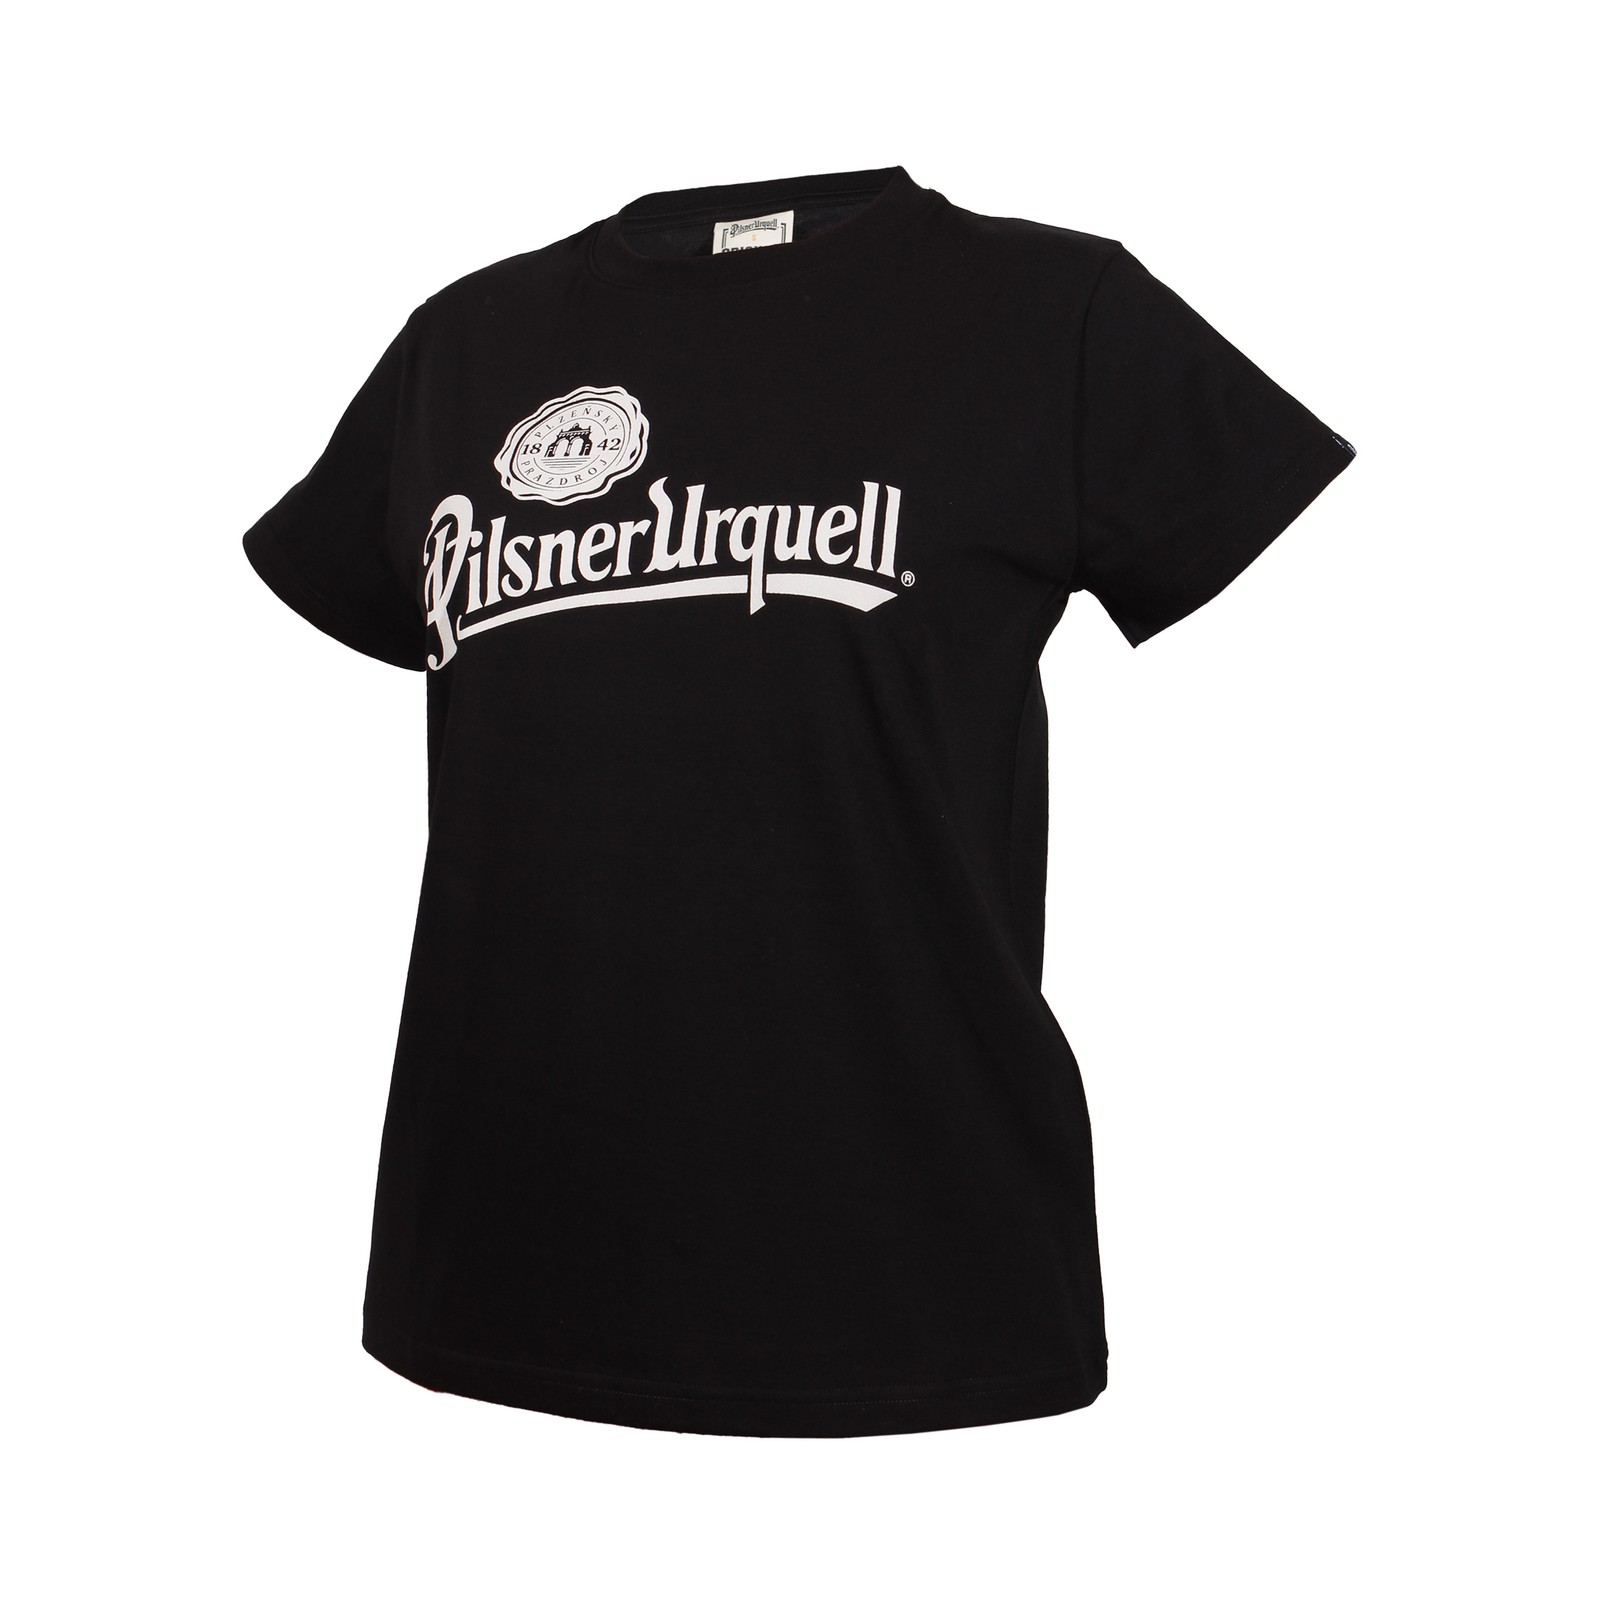 Dámské černé triko Pilsner Urquell logo